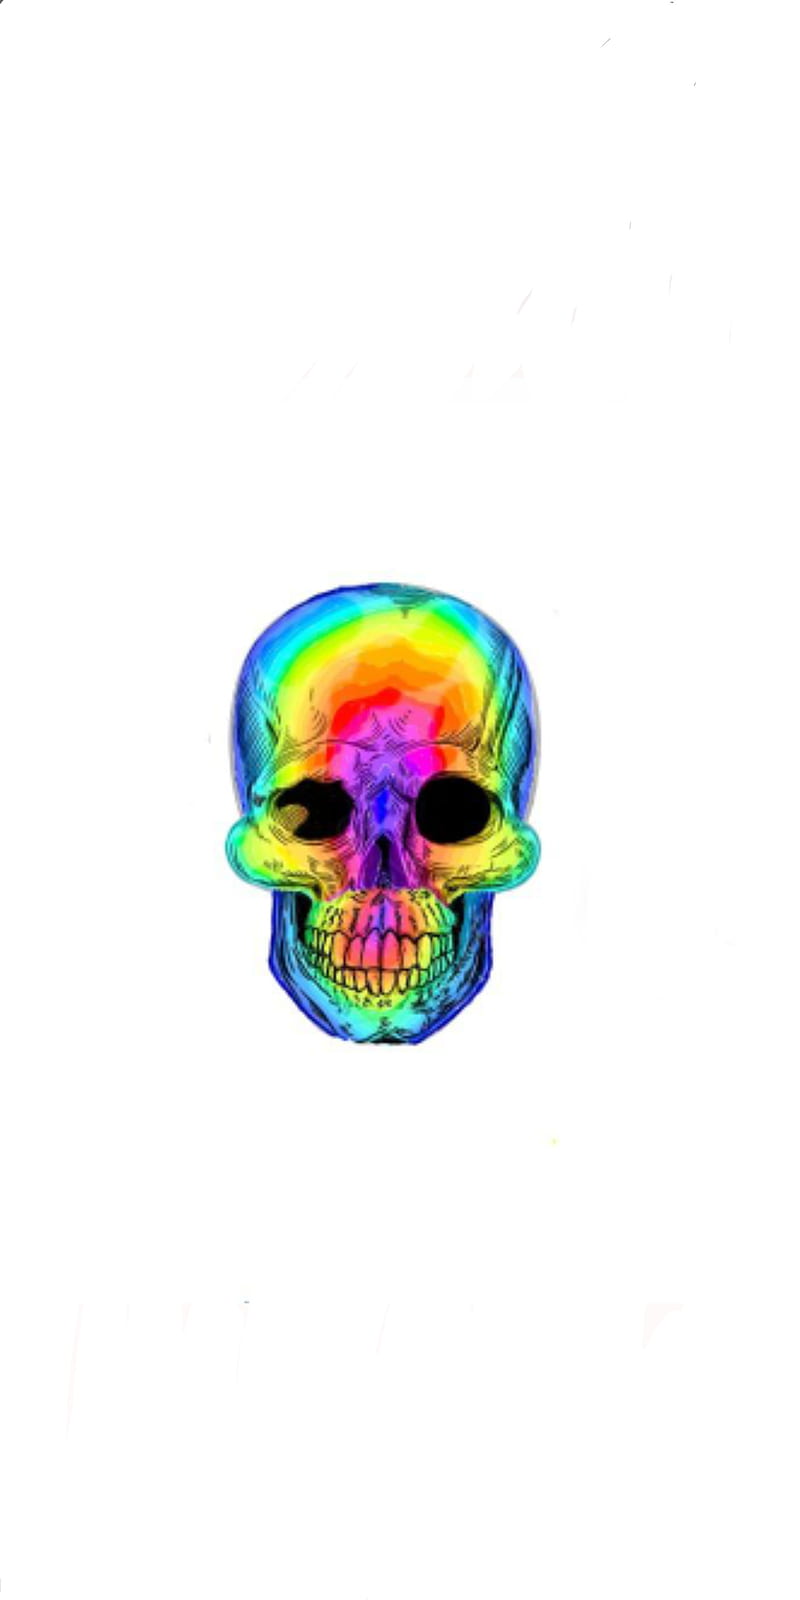 1920x1080px, 1080P free download | Skull, art, color, cool, heatmap ...